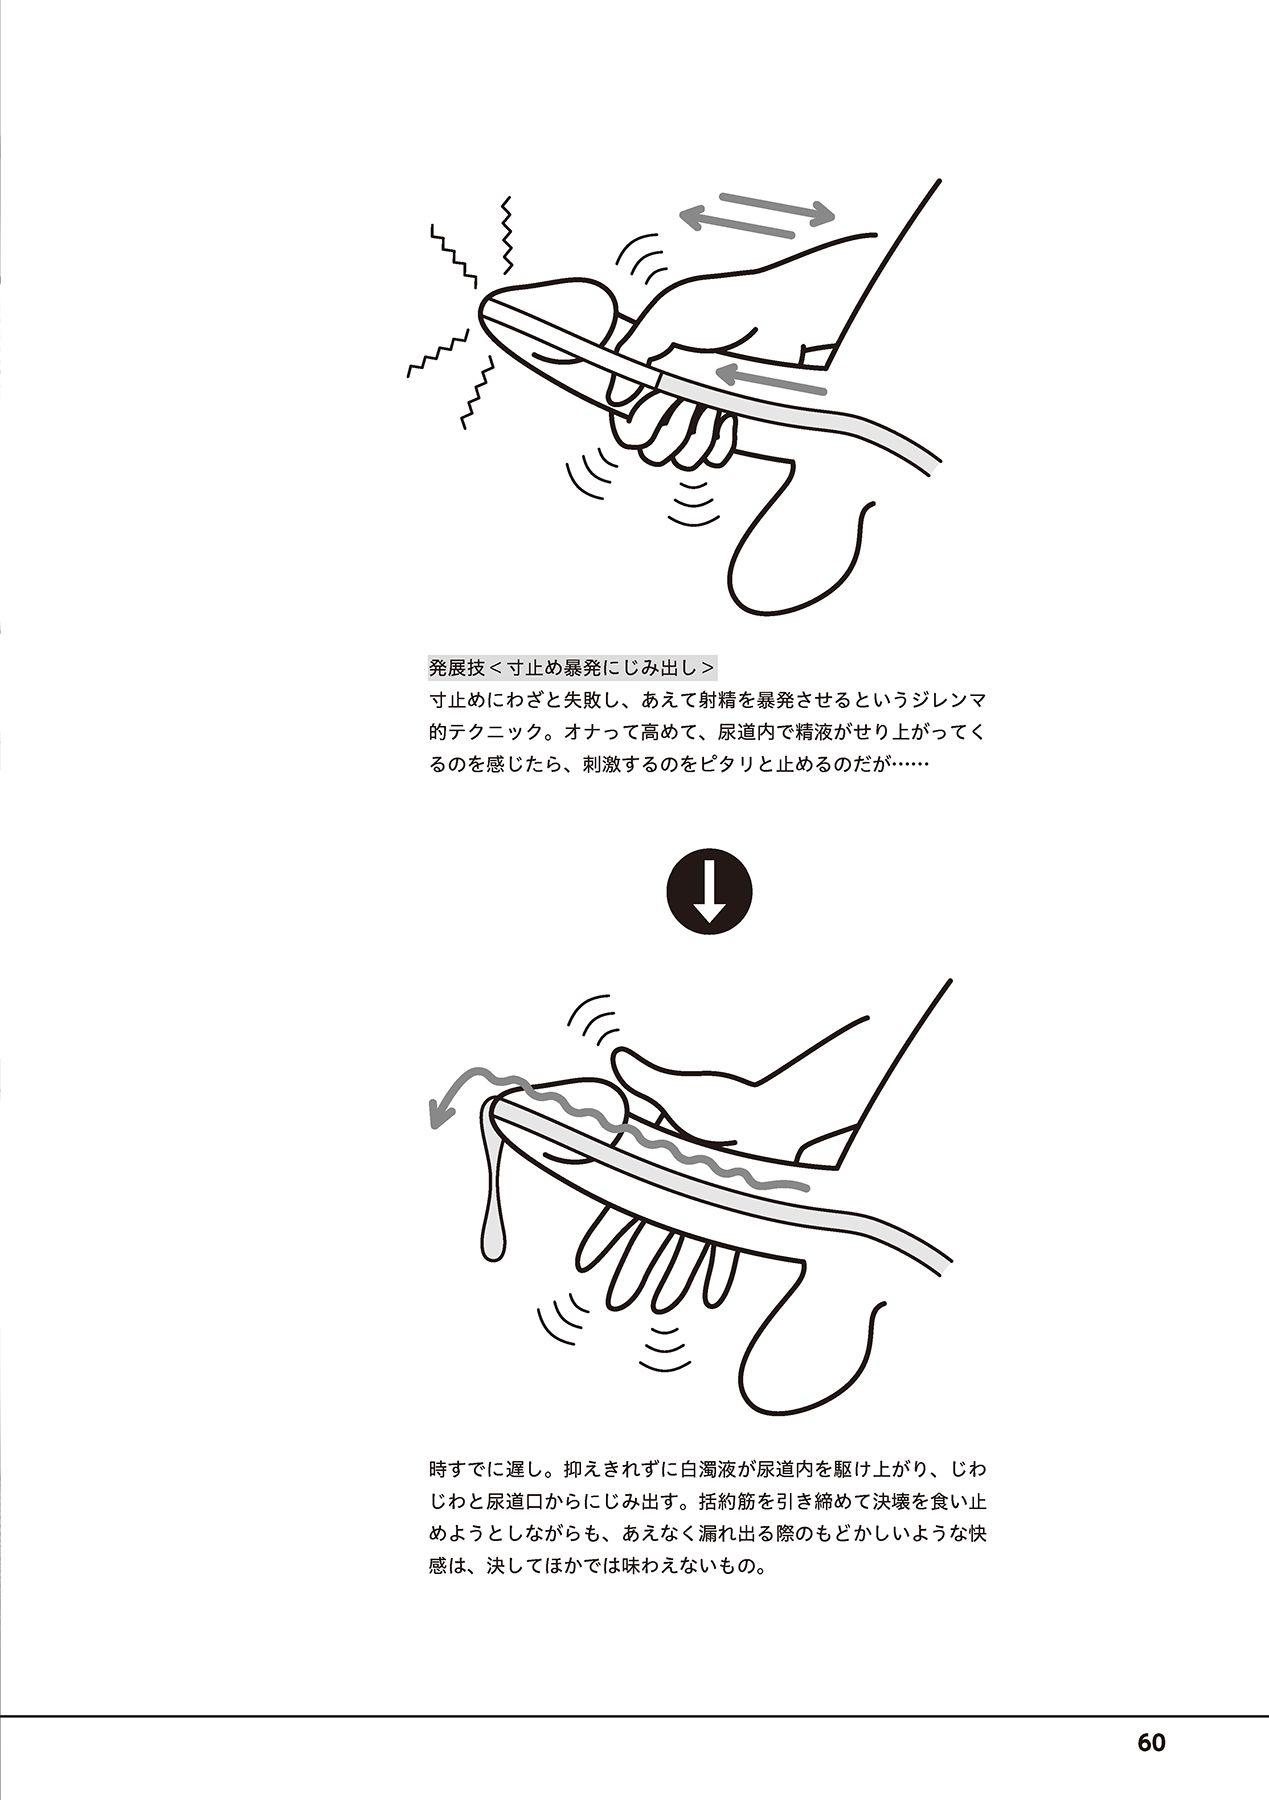 Otoko no Jii Onanie Kanzen Manual Illustration Han...... Onanie Play 61